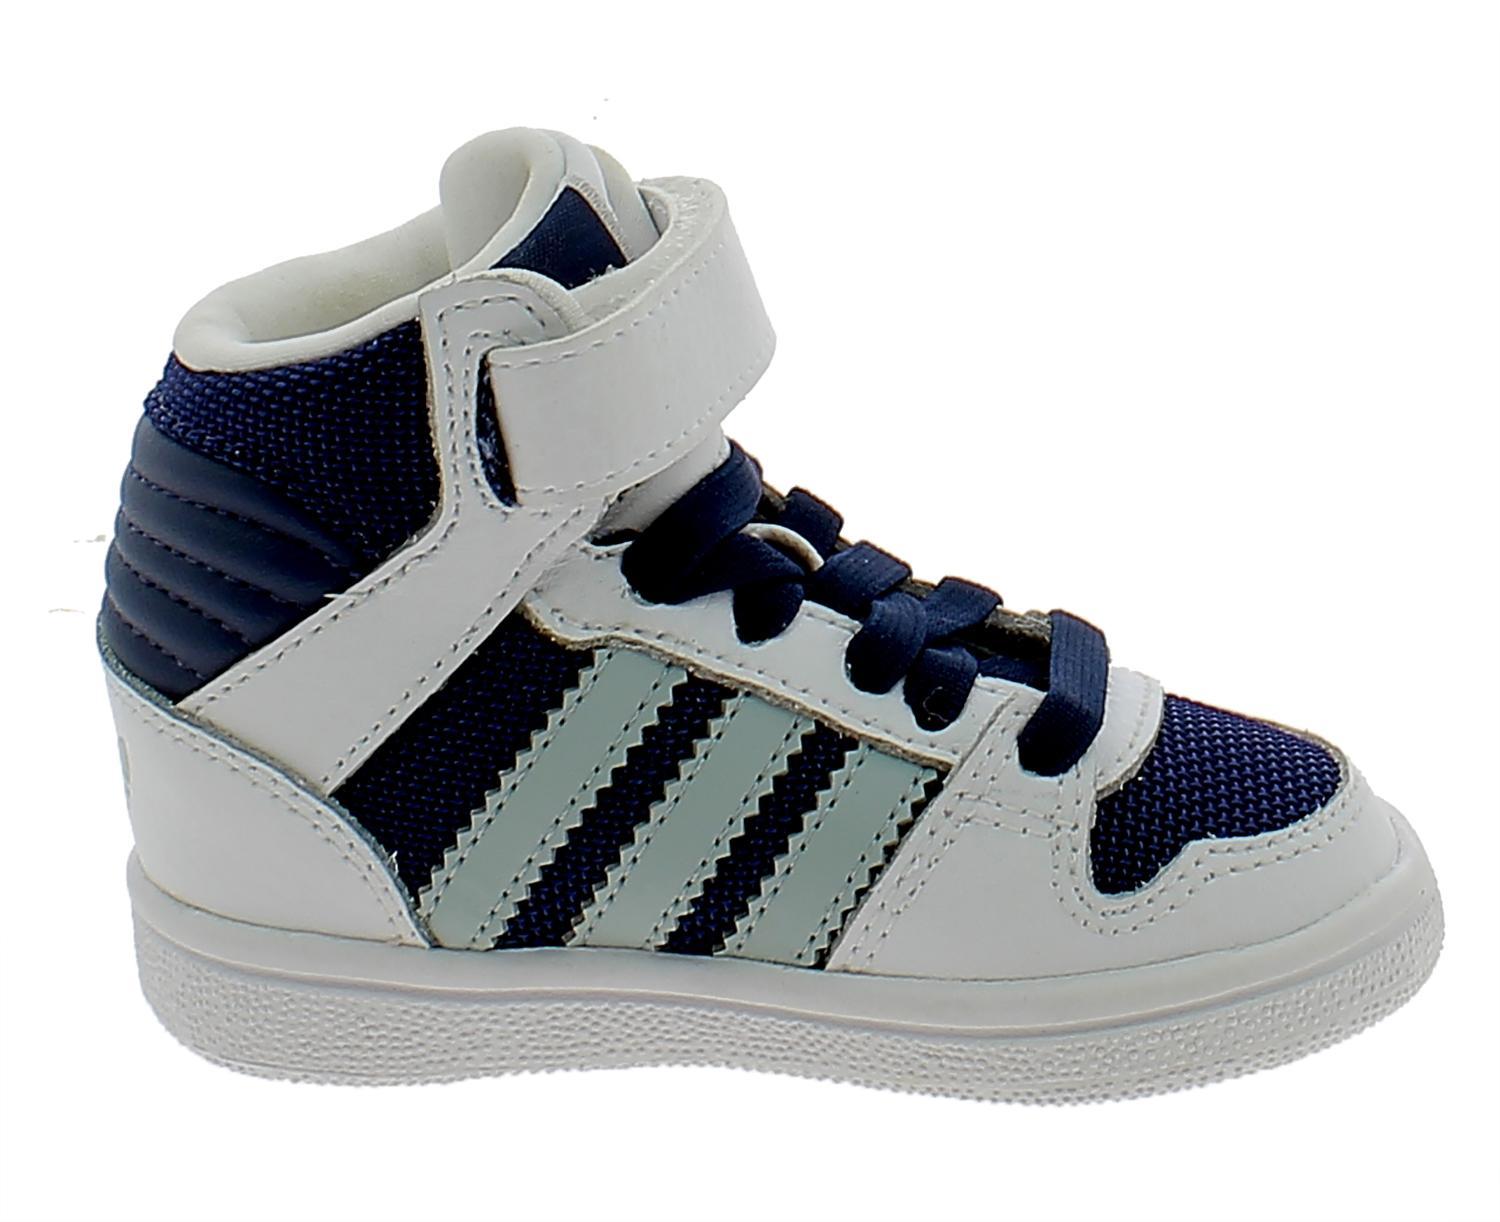 adidas originals adidas pro play 2 cf i scarpe sportive bambino bianco blu lacci strappi b25720